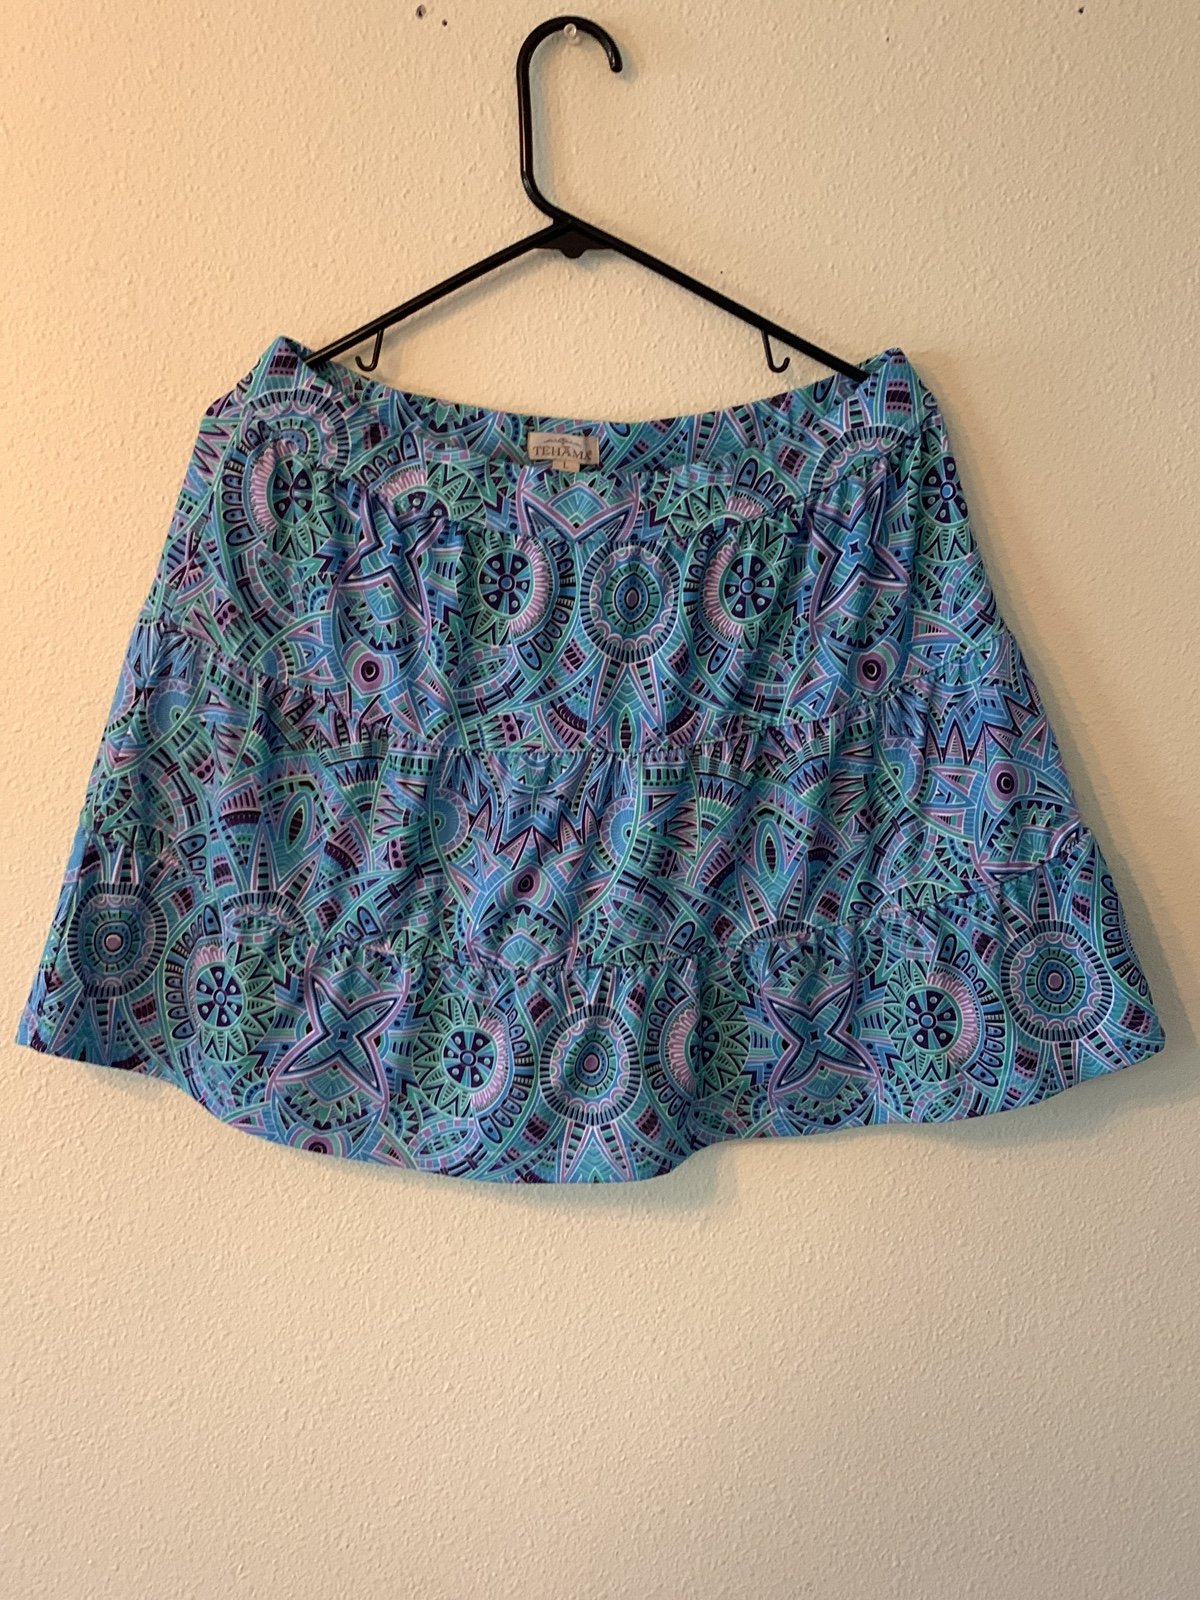 reasonable price Tehama blue skirt women´s size la